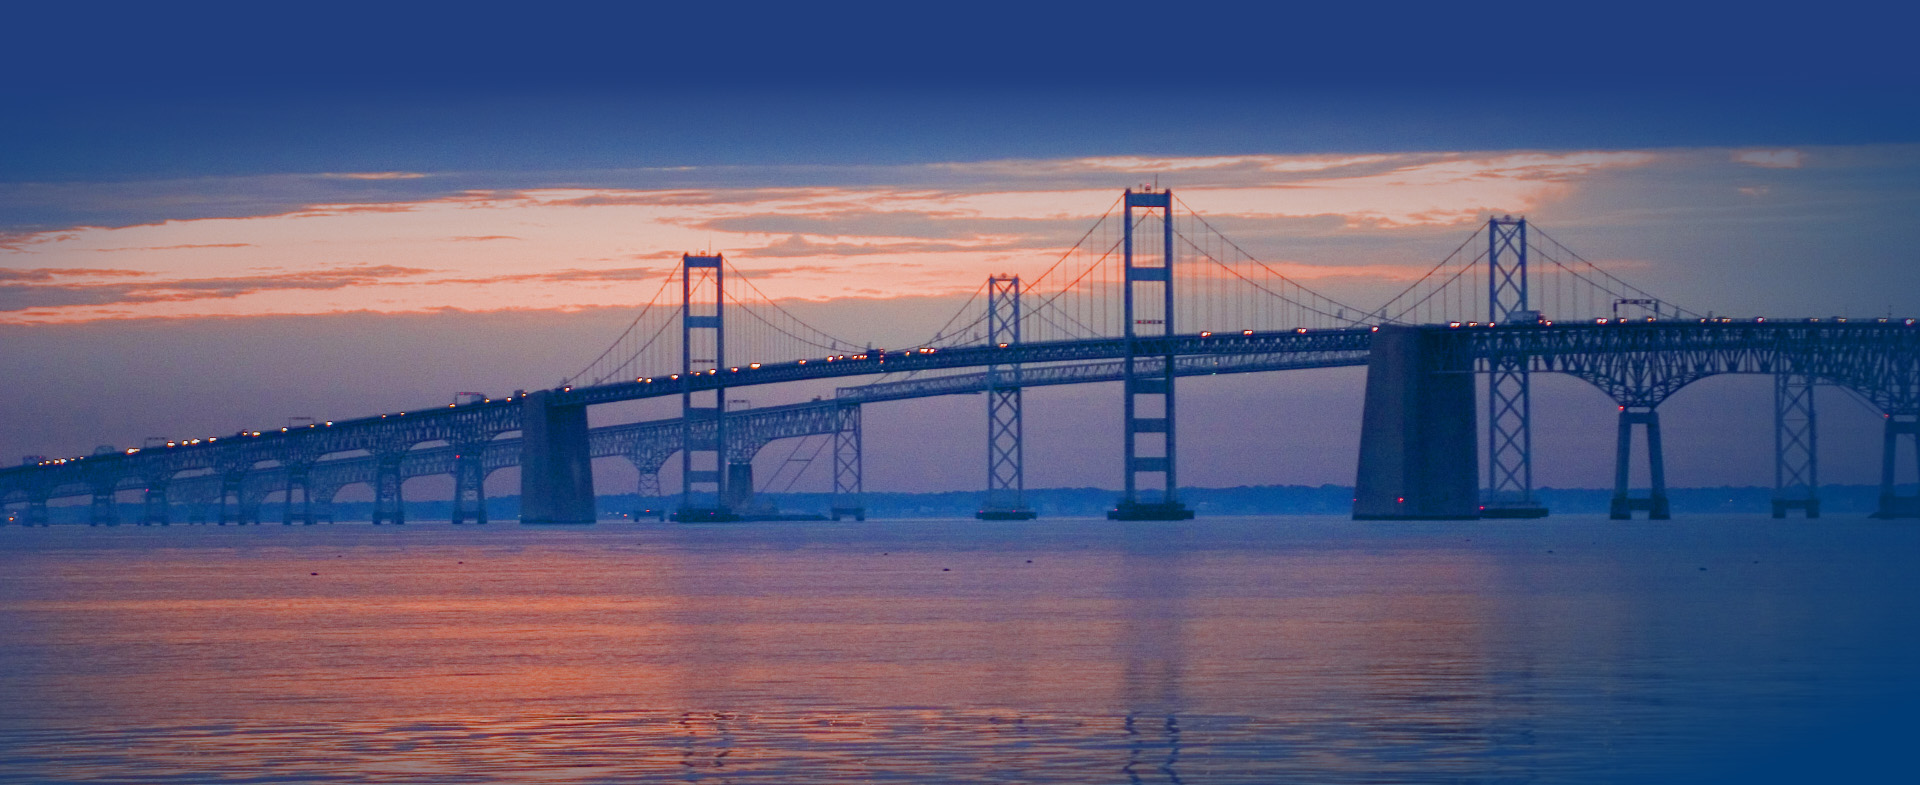 The Chesapeake Bay Bridge at sunset backed with an orange sky.